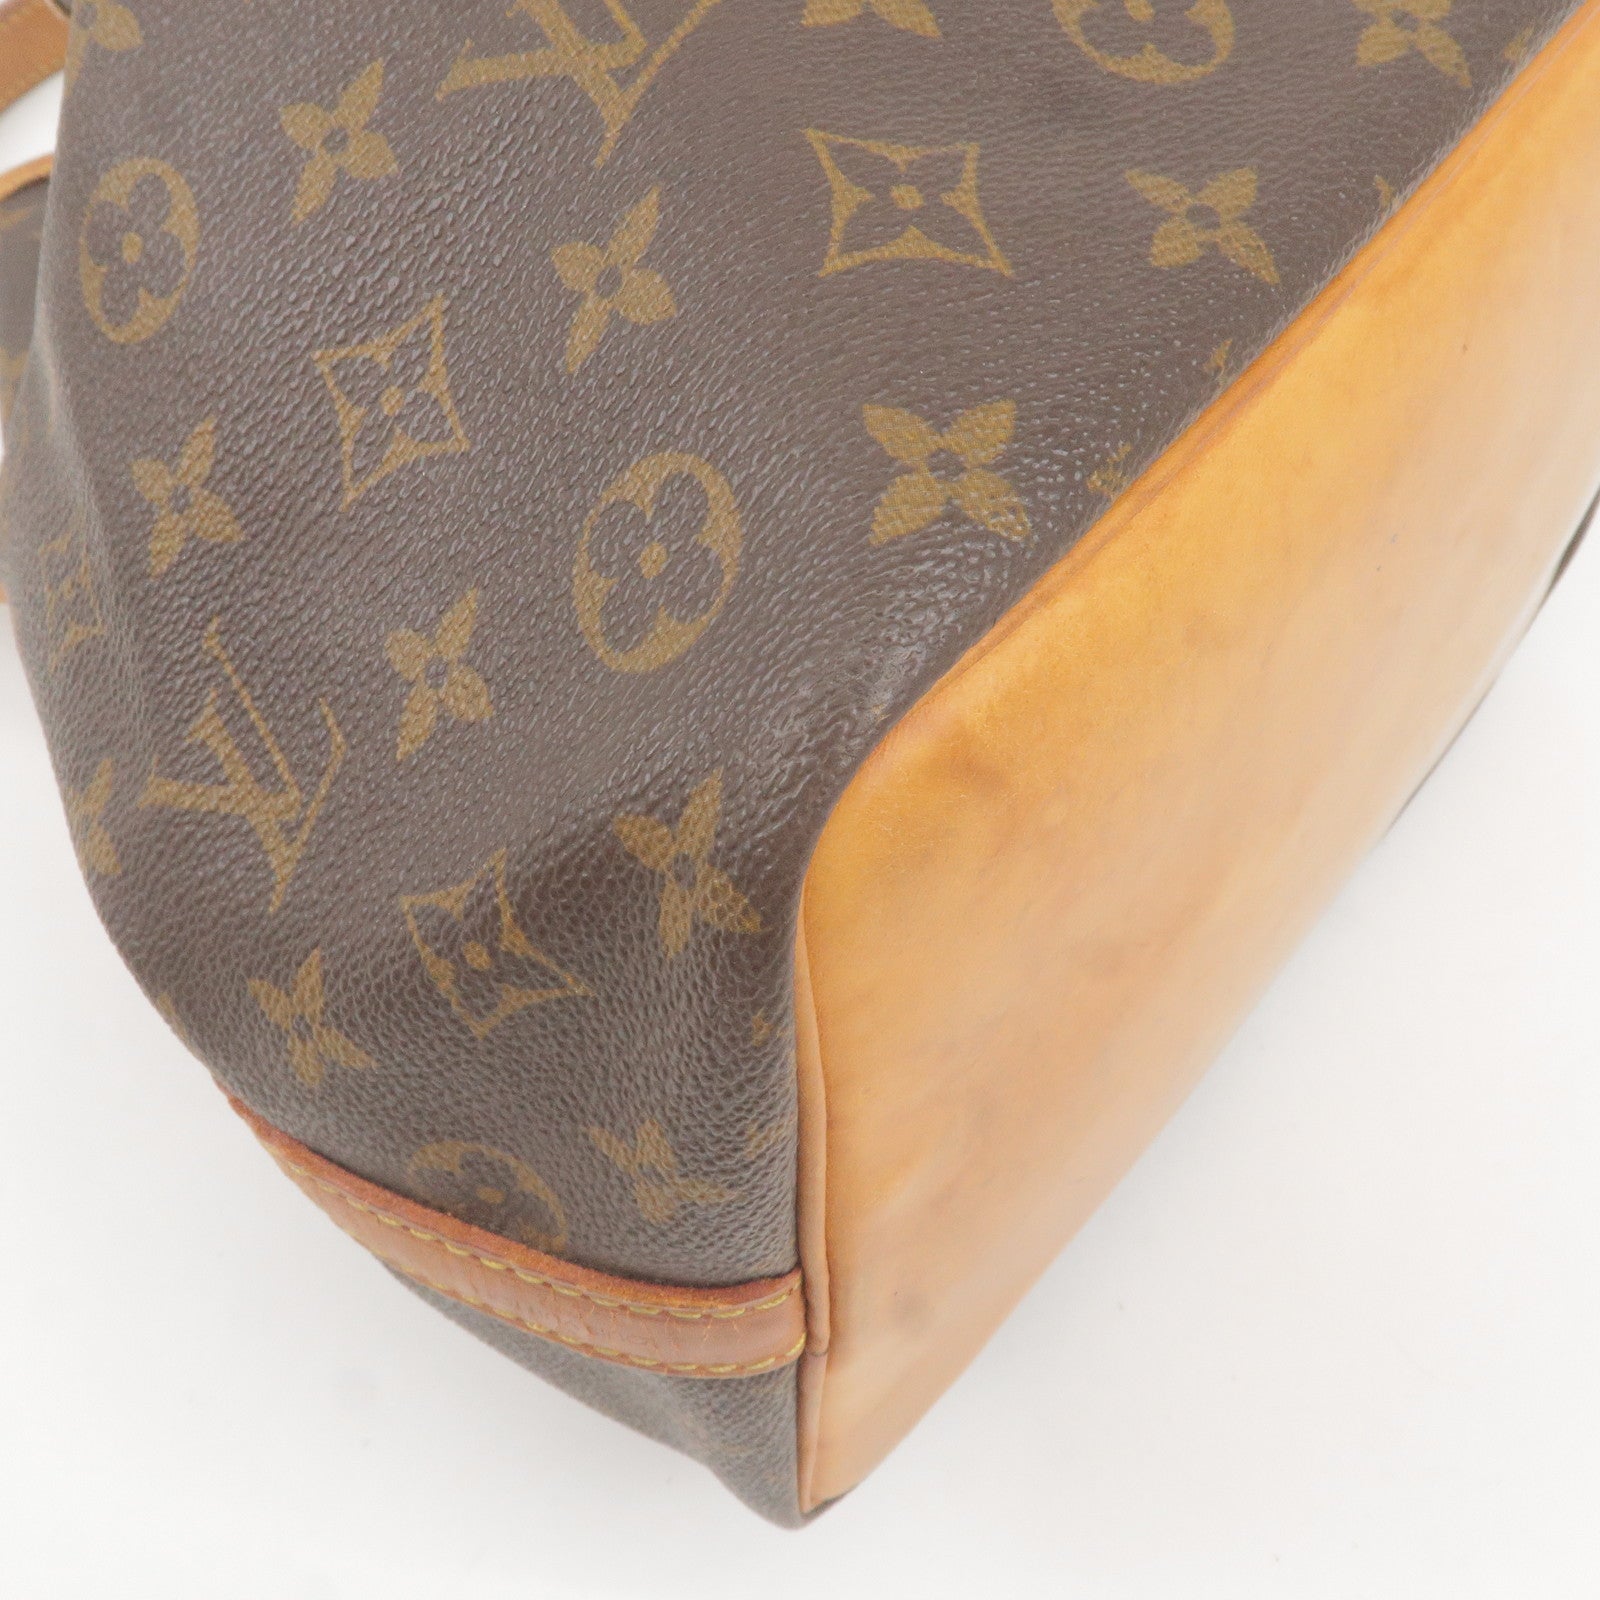 Louis Vuitton - Petite Malle Bag - Monogram Canvas - Women - Luxury